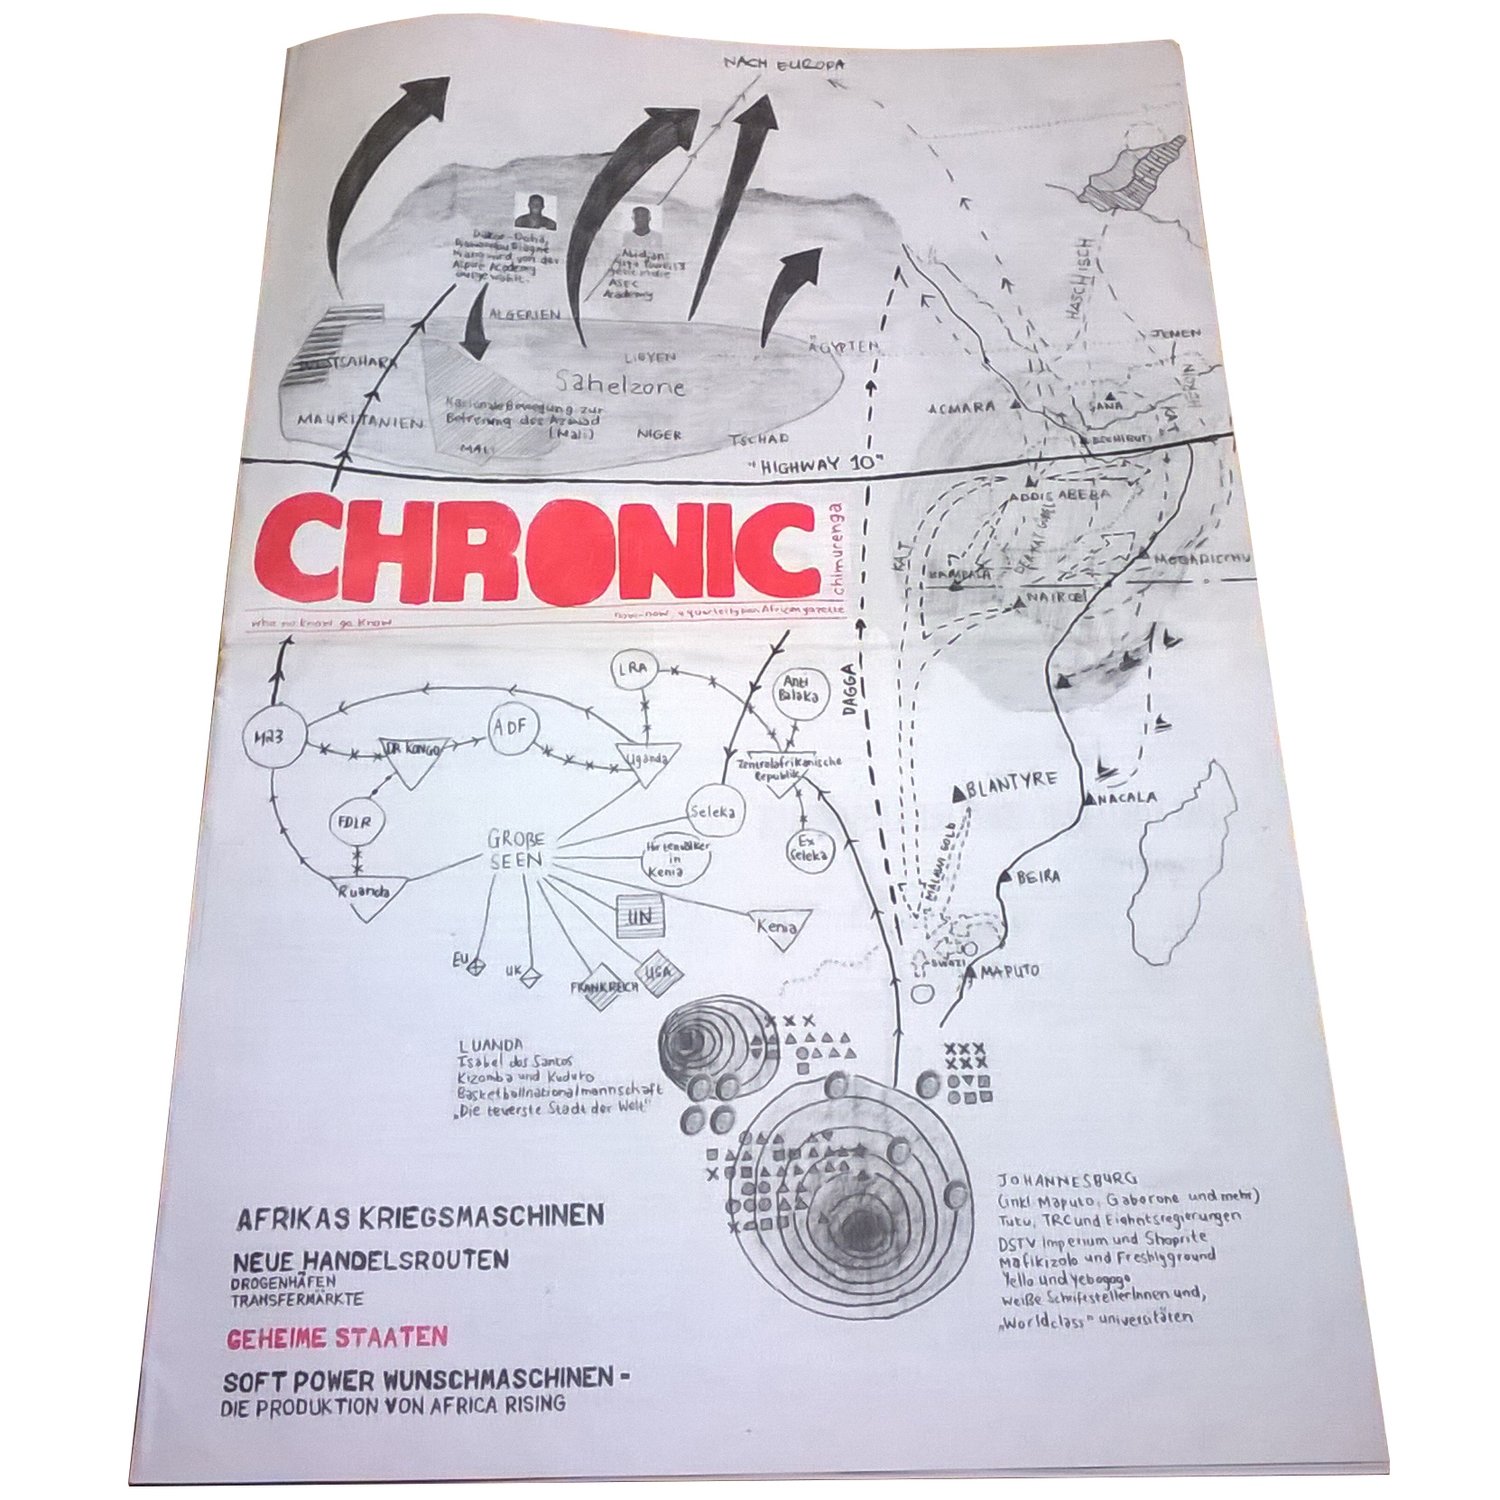 Chimurenga Chronic: German Special Edition (October 2016)